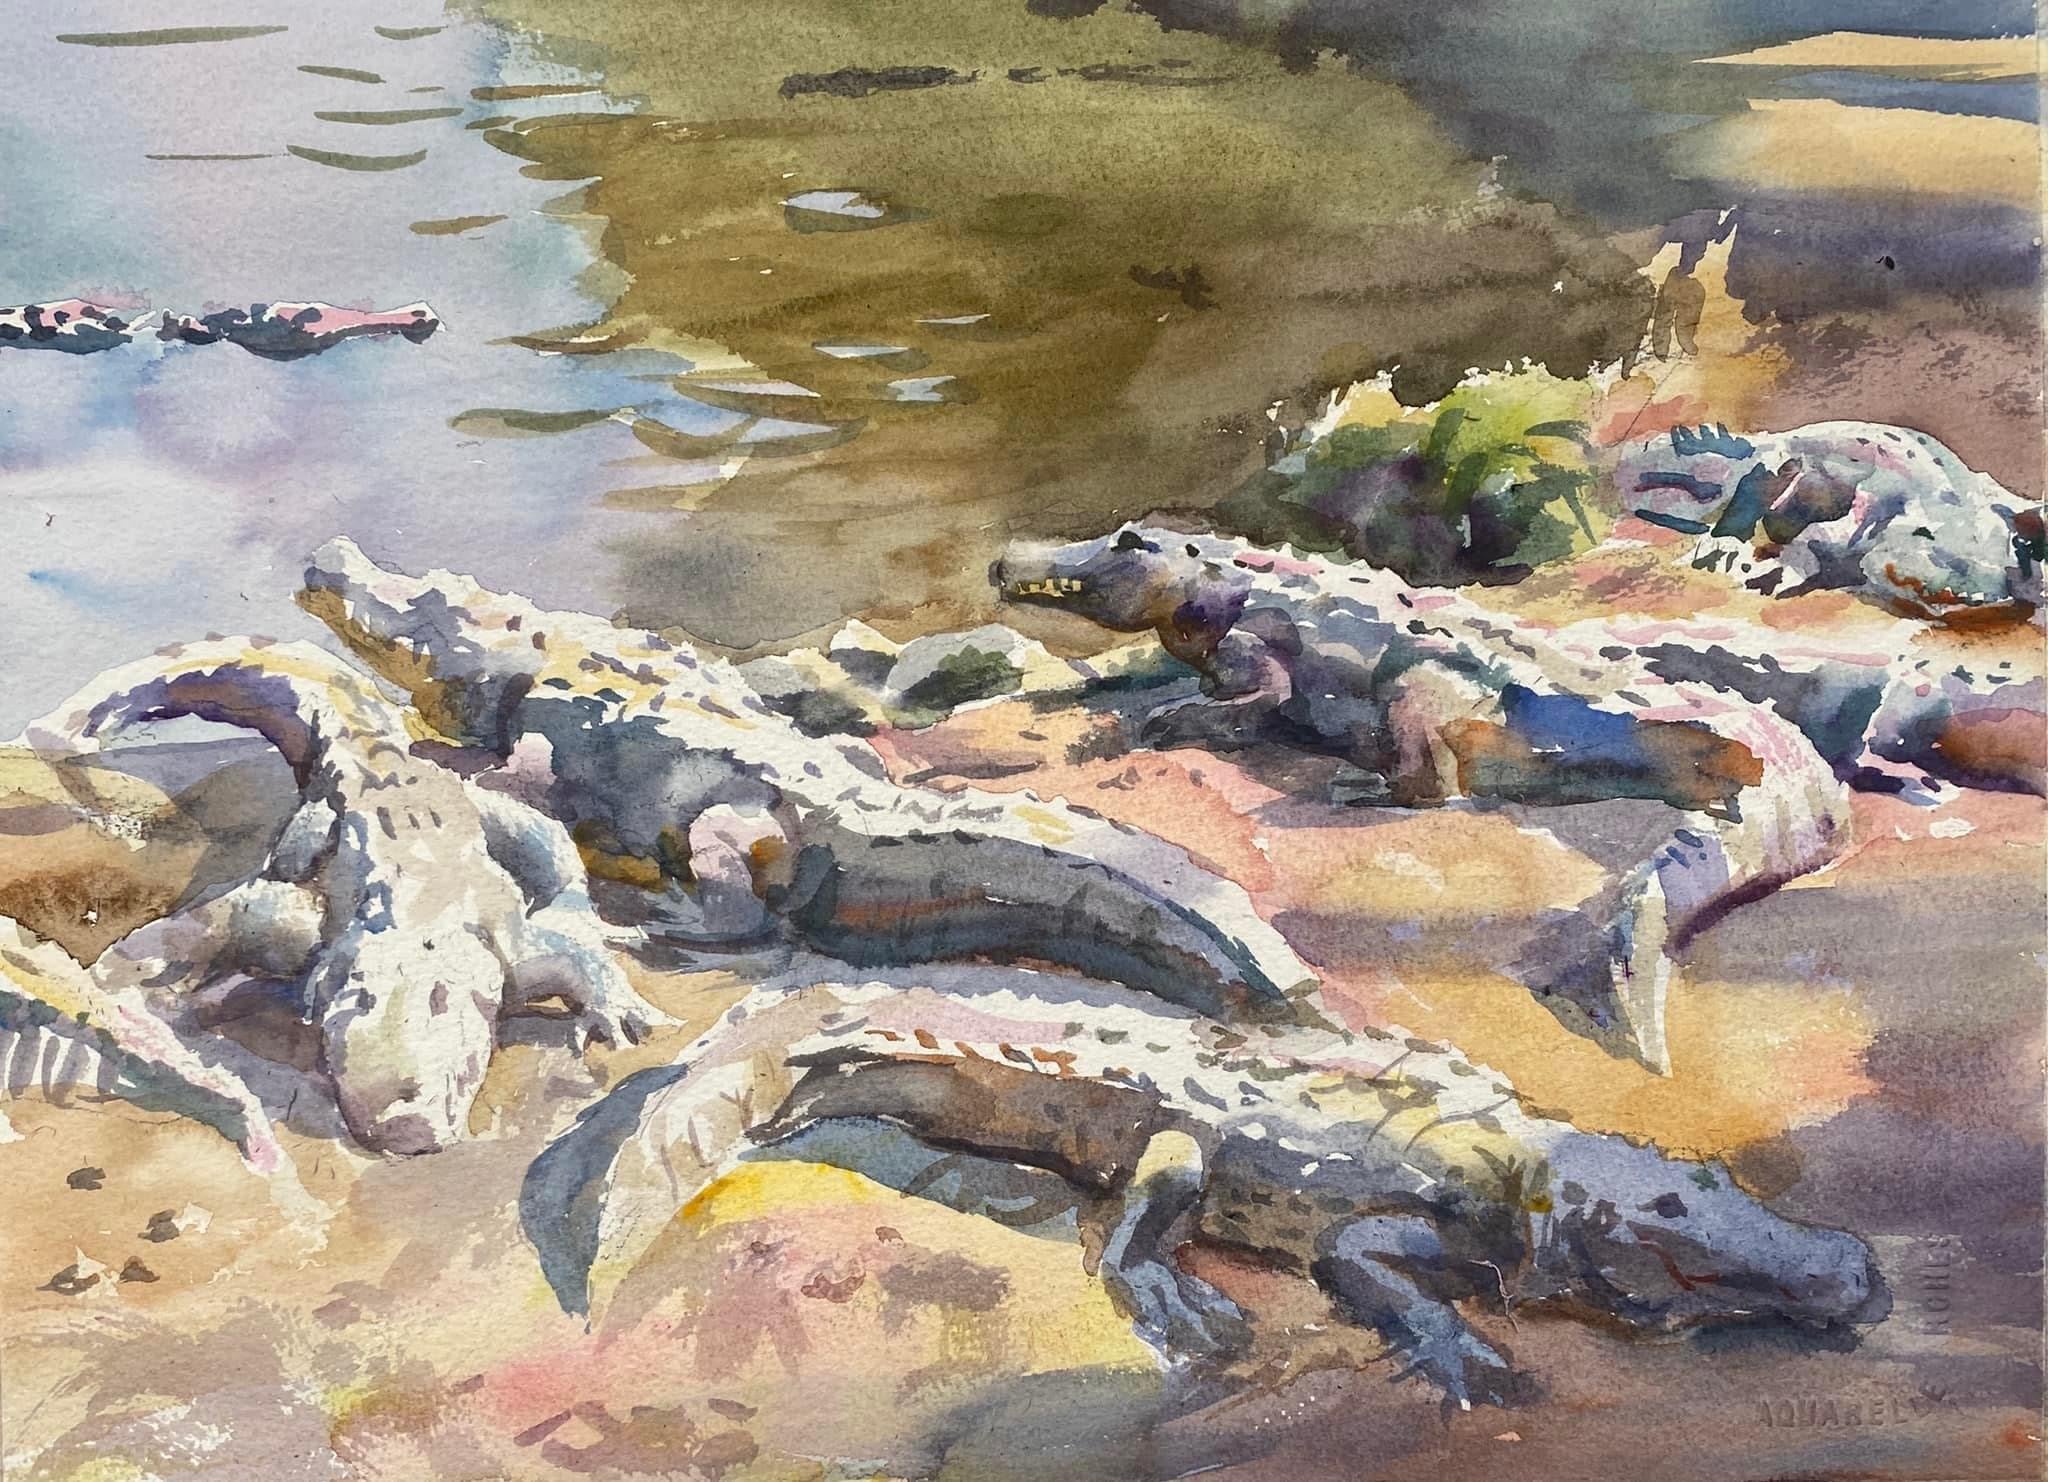 Dangerous Alligations | The Everglades